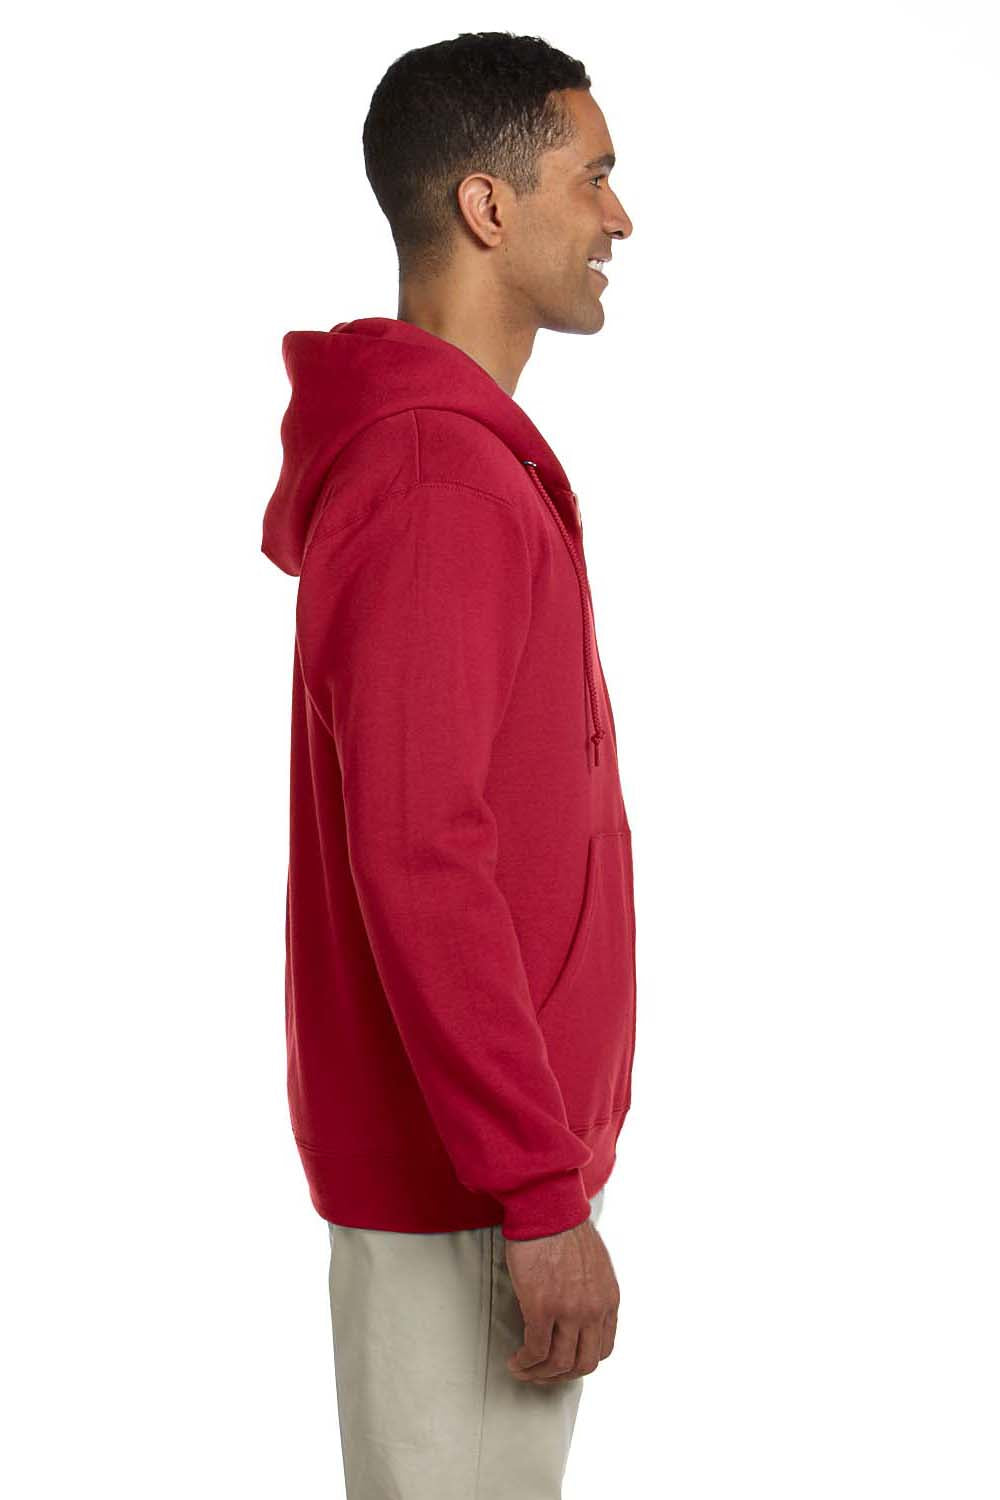 Jerzees 4999 Mens Super Sweats NuBlend Fleece Full Zip Hooded Sweatshirt Hoodie Red Side